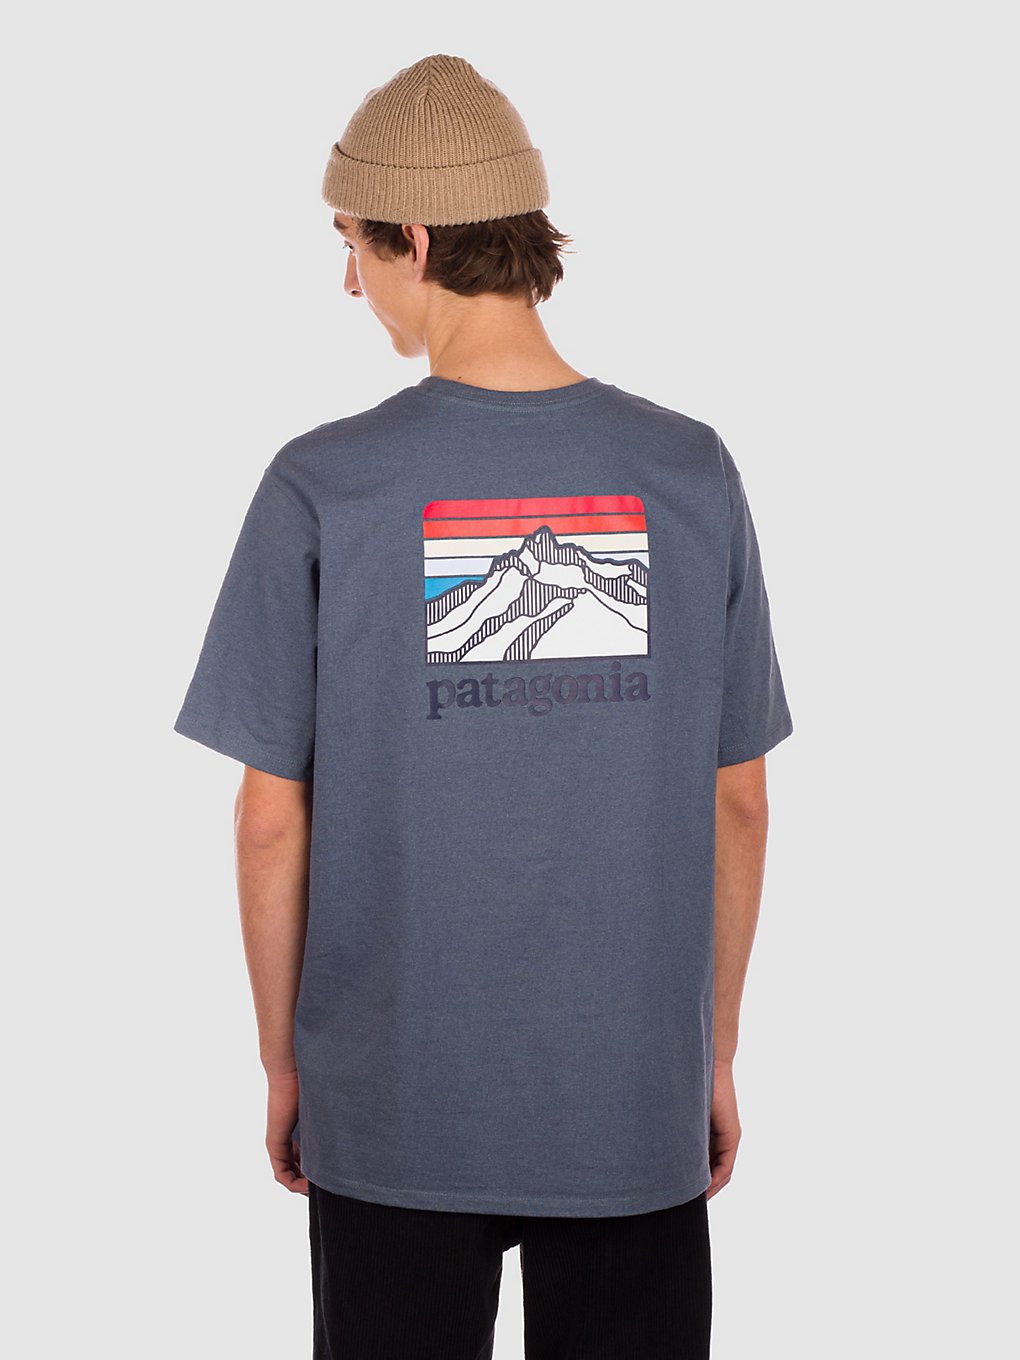 Patagonia Line Logo Ridge Pocket Responsib T-Shirt plume grey kaufen